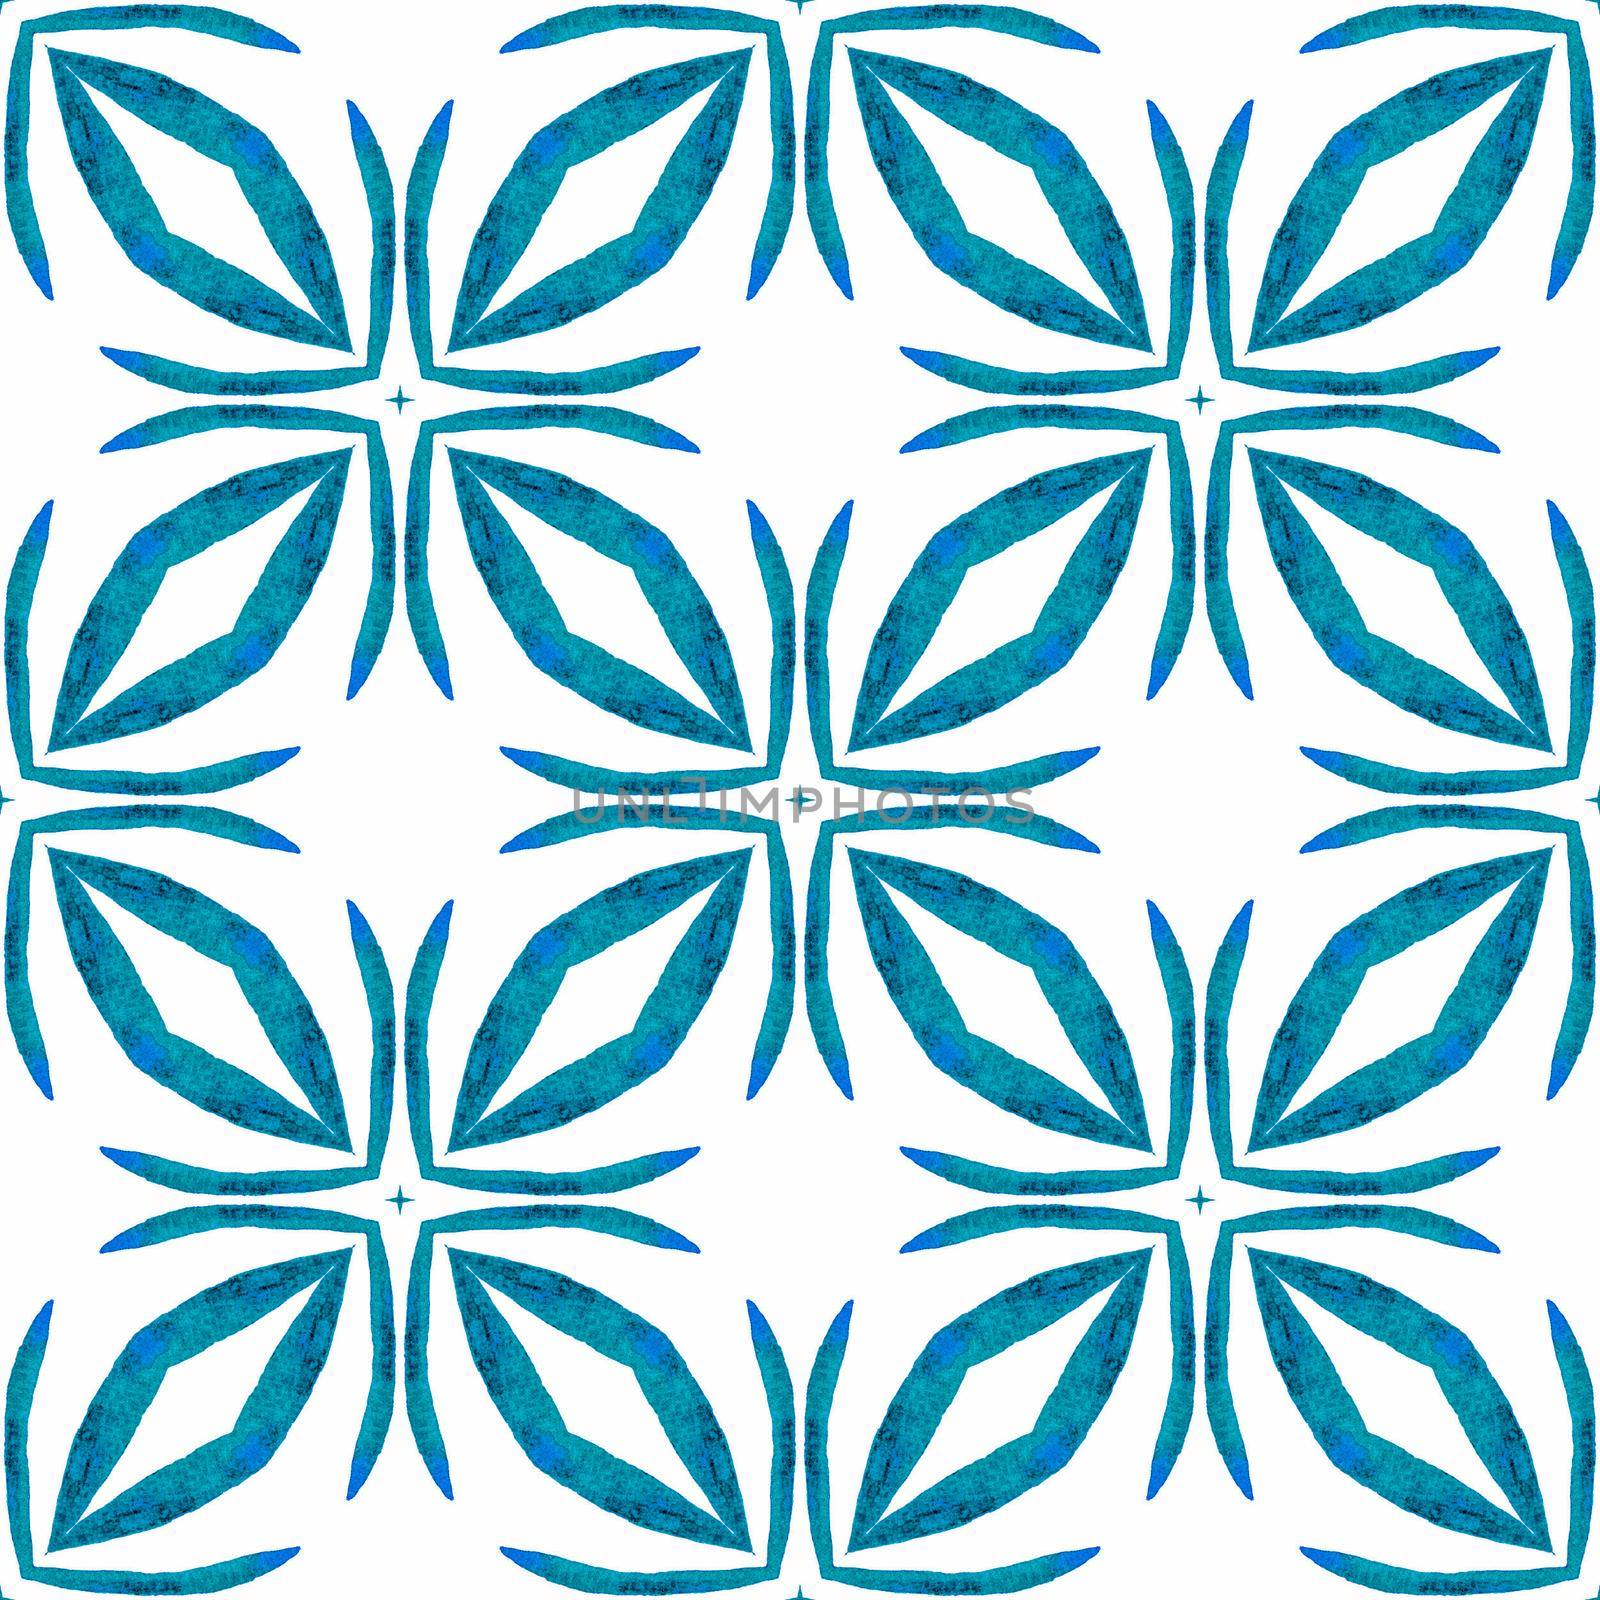 Organic tile. Blue trending boho chic summer by beginagain